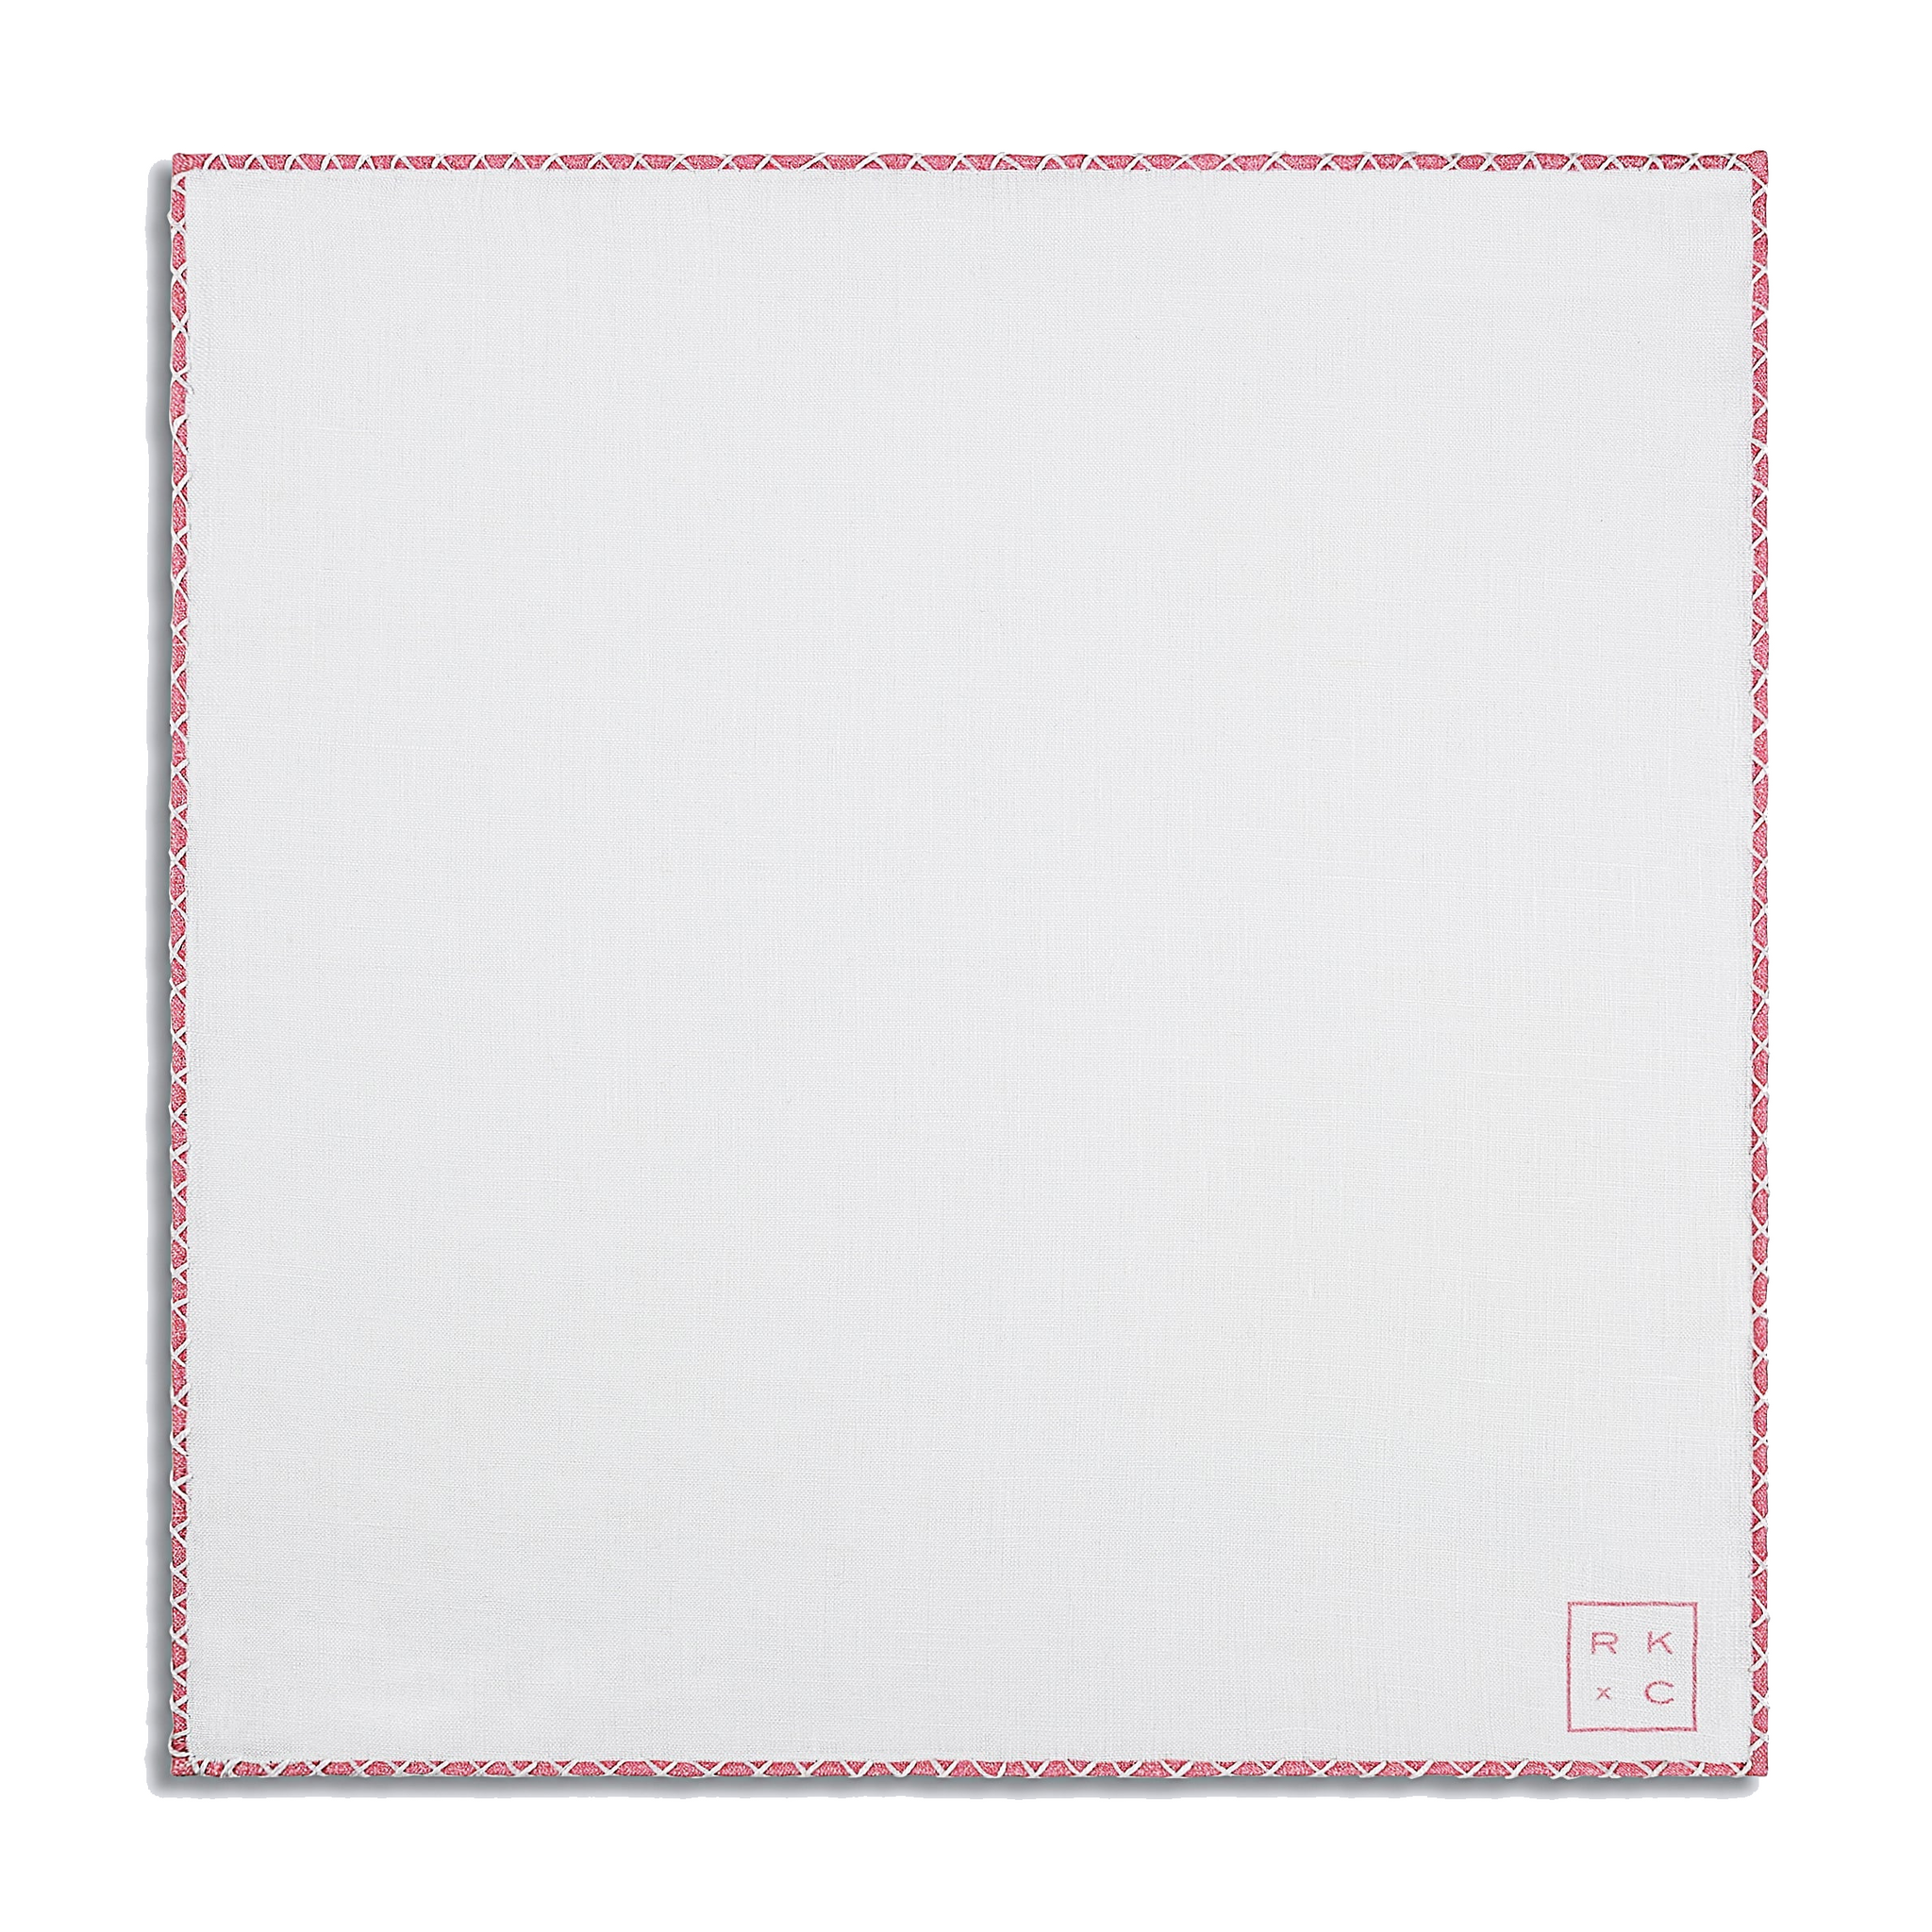 Boundaries (Pink) - Pocket Square